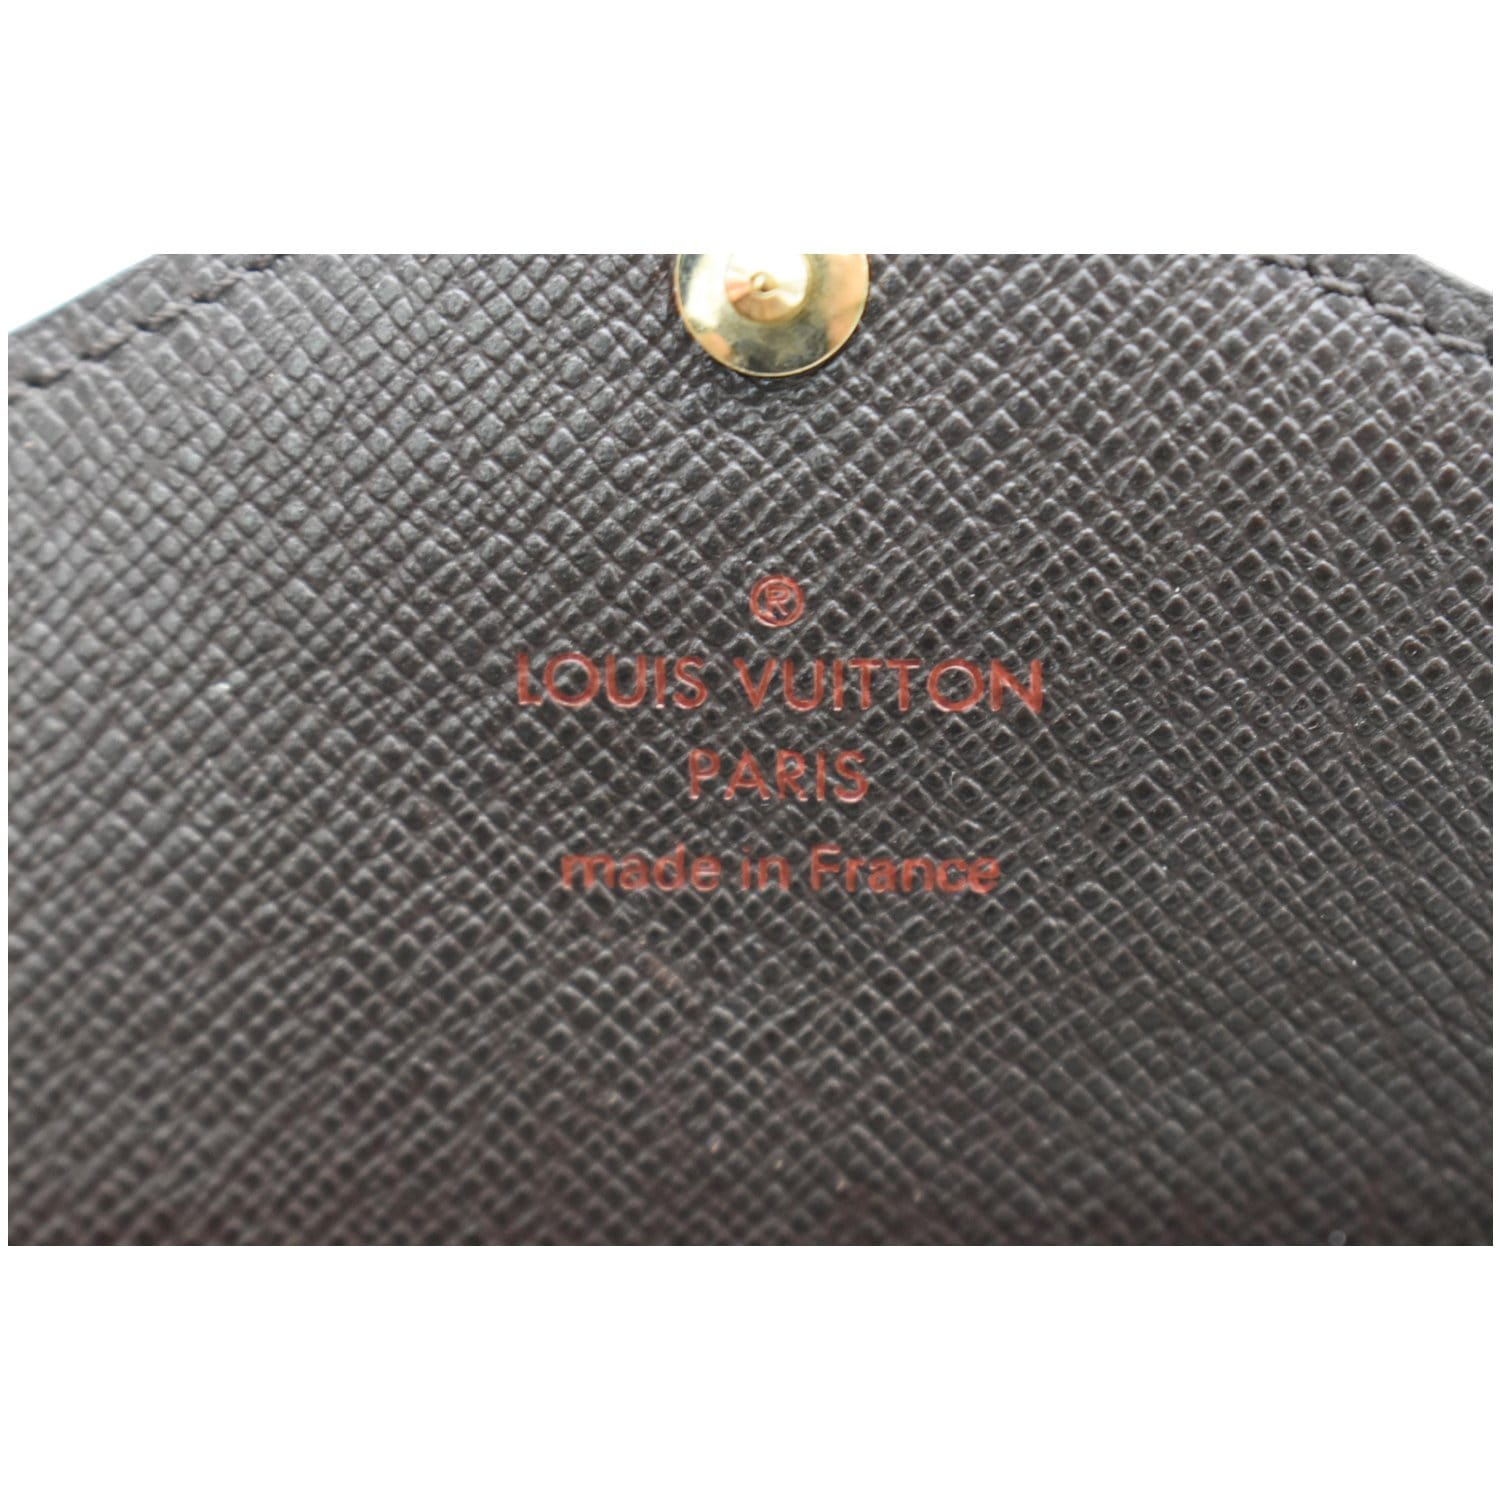 Louis Vuitton Damier Ebene Canvas Origami Wallet - BOPF